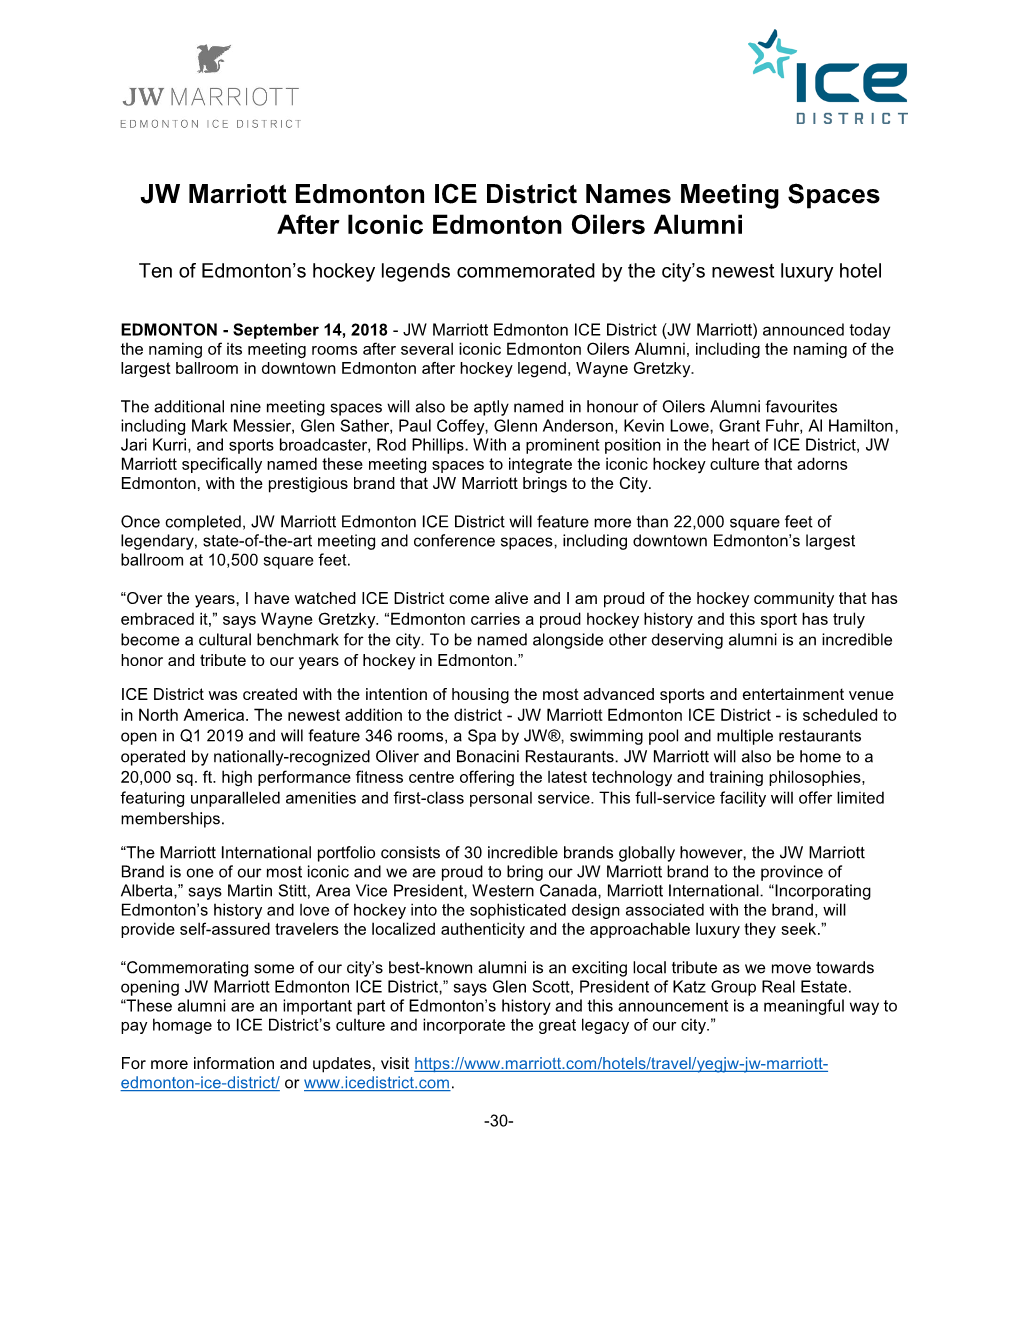 JW Marriott Edmonton ICE District Names Meeting Spaces After Iconic Edmonton Oilers Alumni